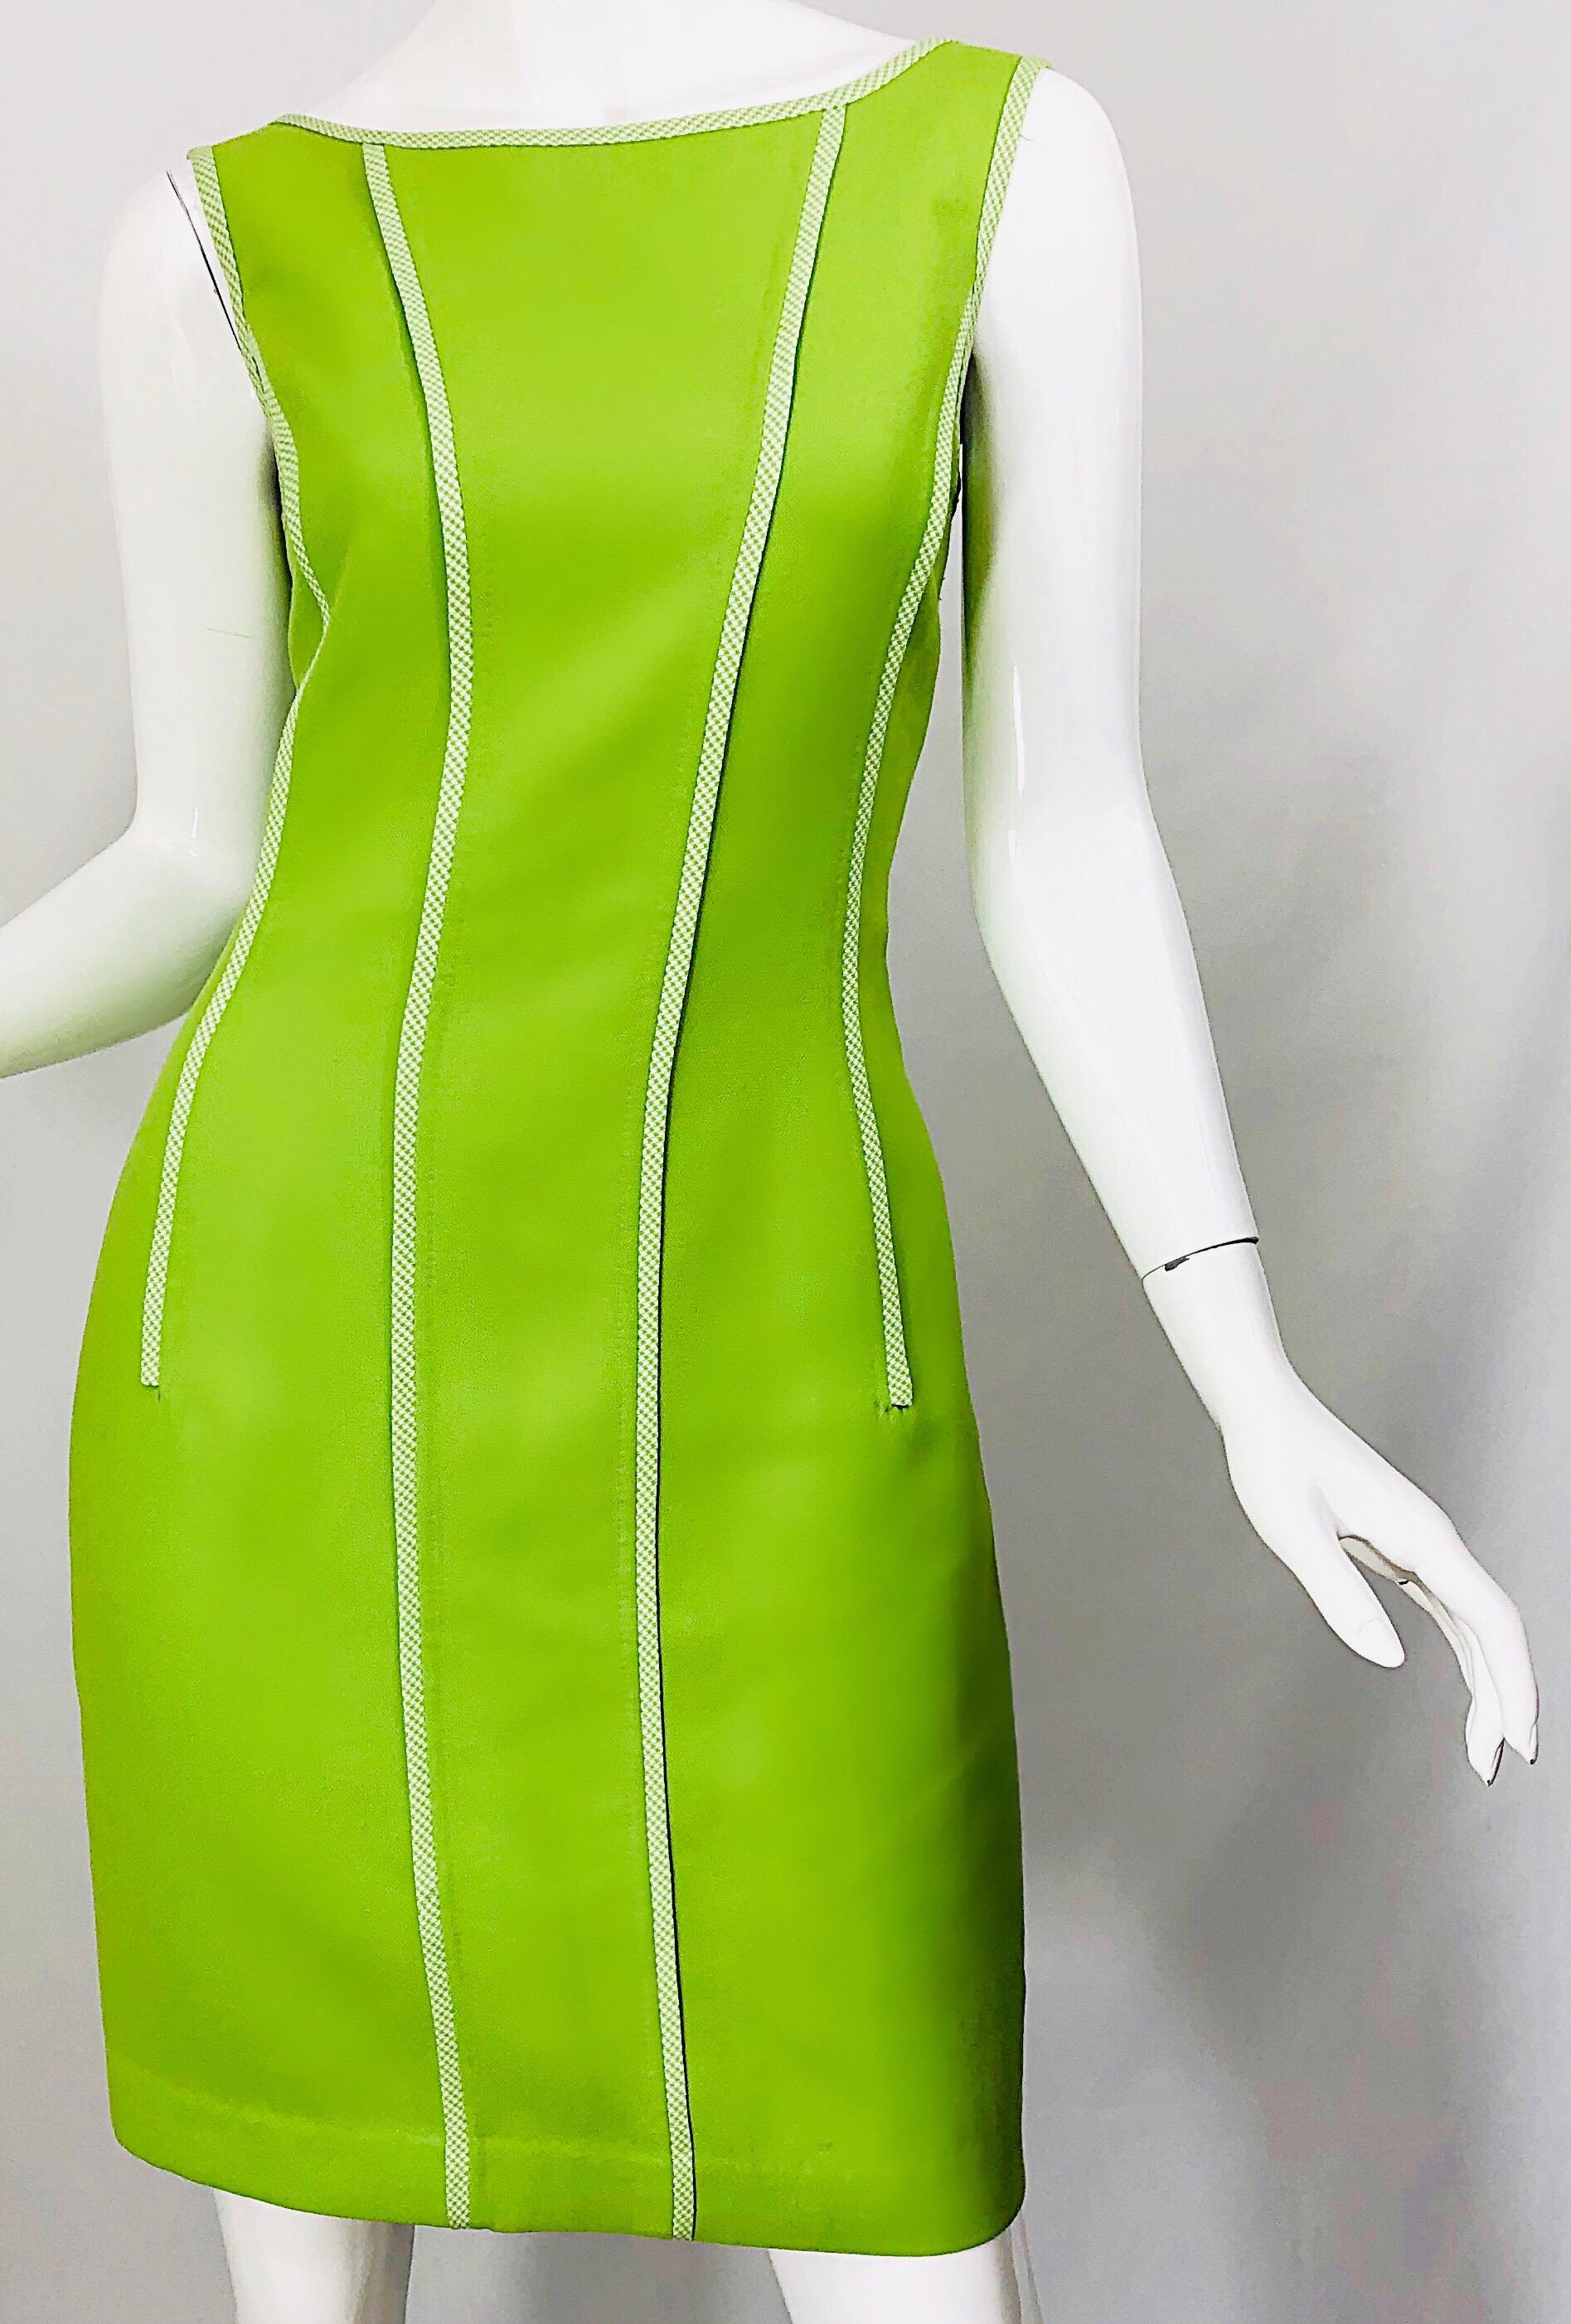 Vintage Oscar de la Renta Size 8 1990s Lime Green Gingham 90s Sheath Dress 2